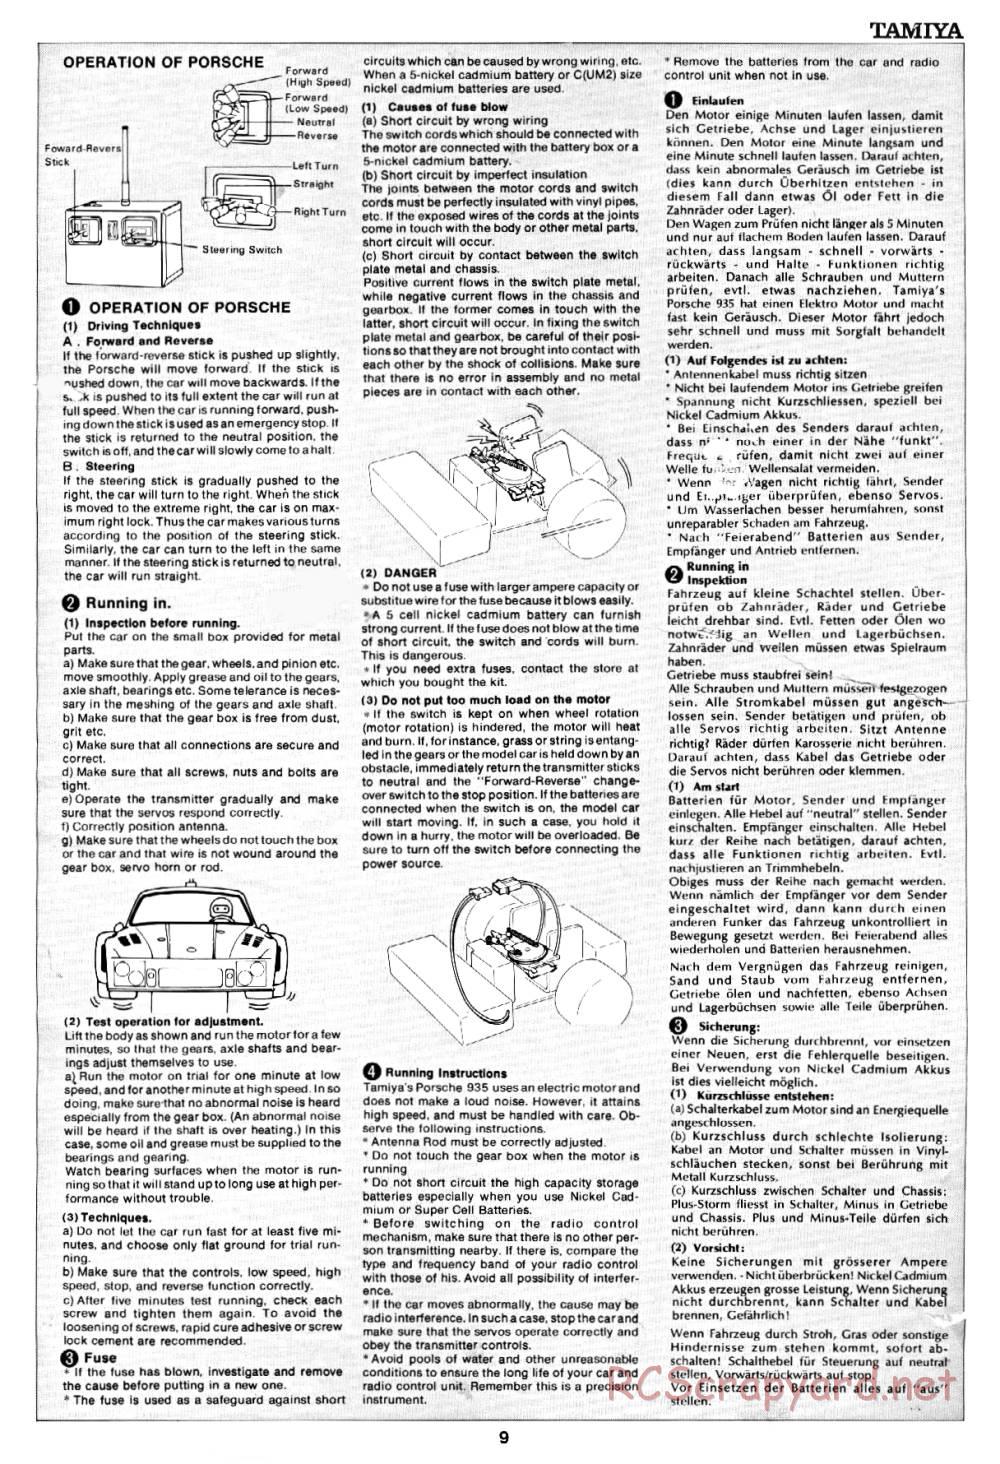 Tamiya - Martini Porsche 935 Turbo - 58002 - Manual - Page 9